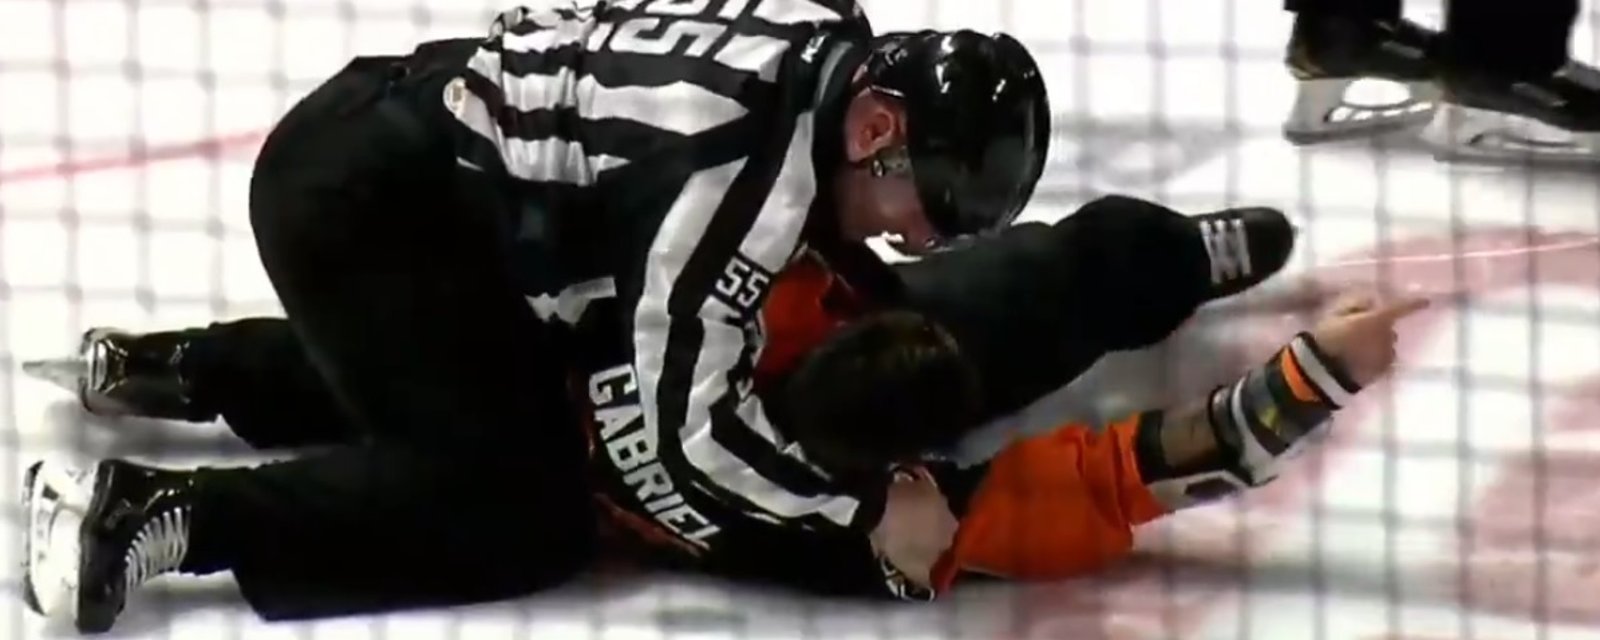 Linesman Richard Jondo slams Kurtis Gabriel to the ice after he refuses to stop fighting.